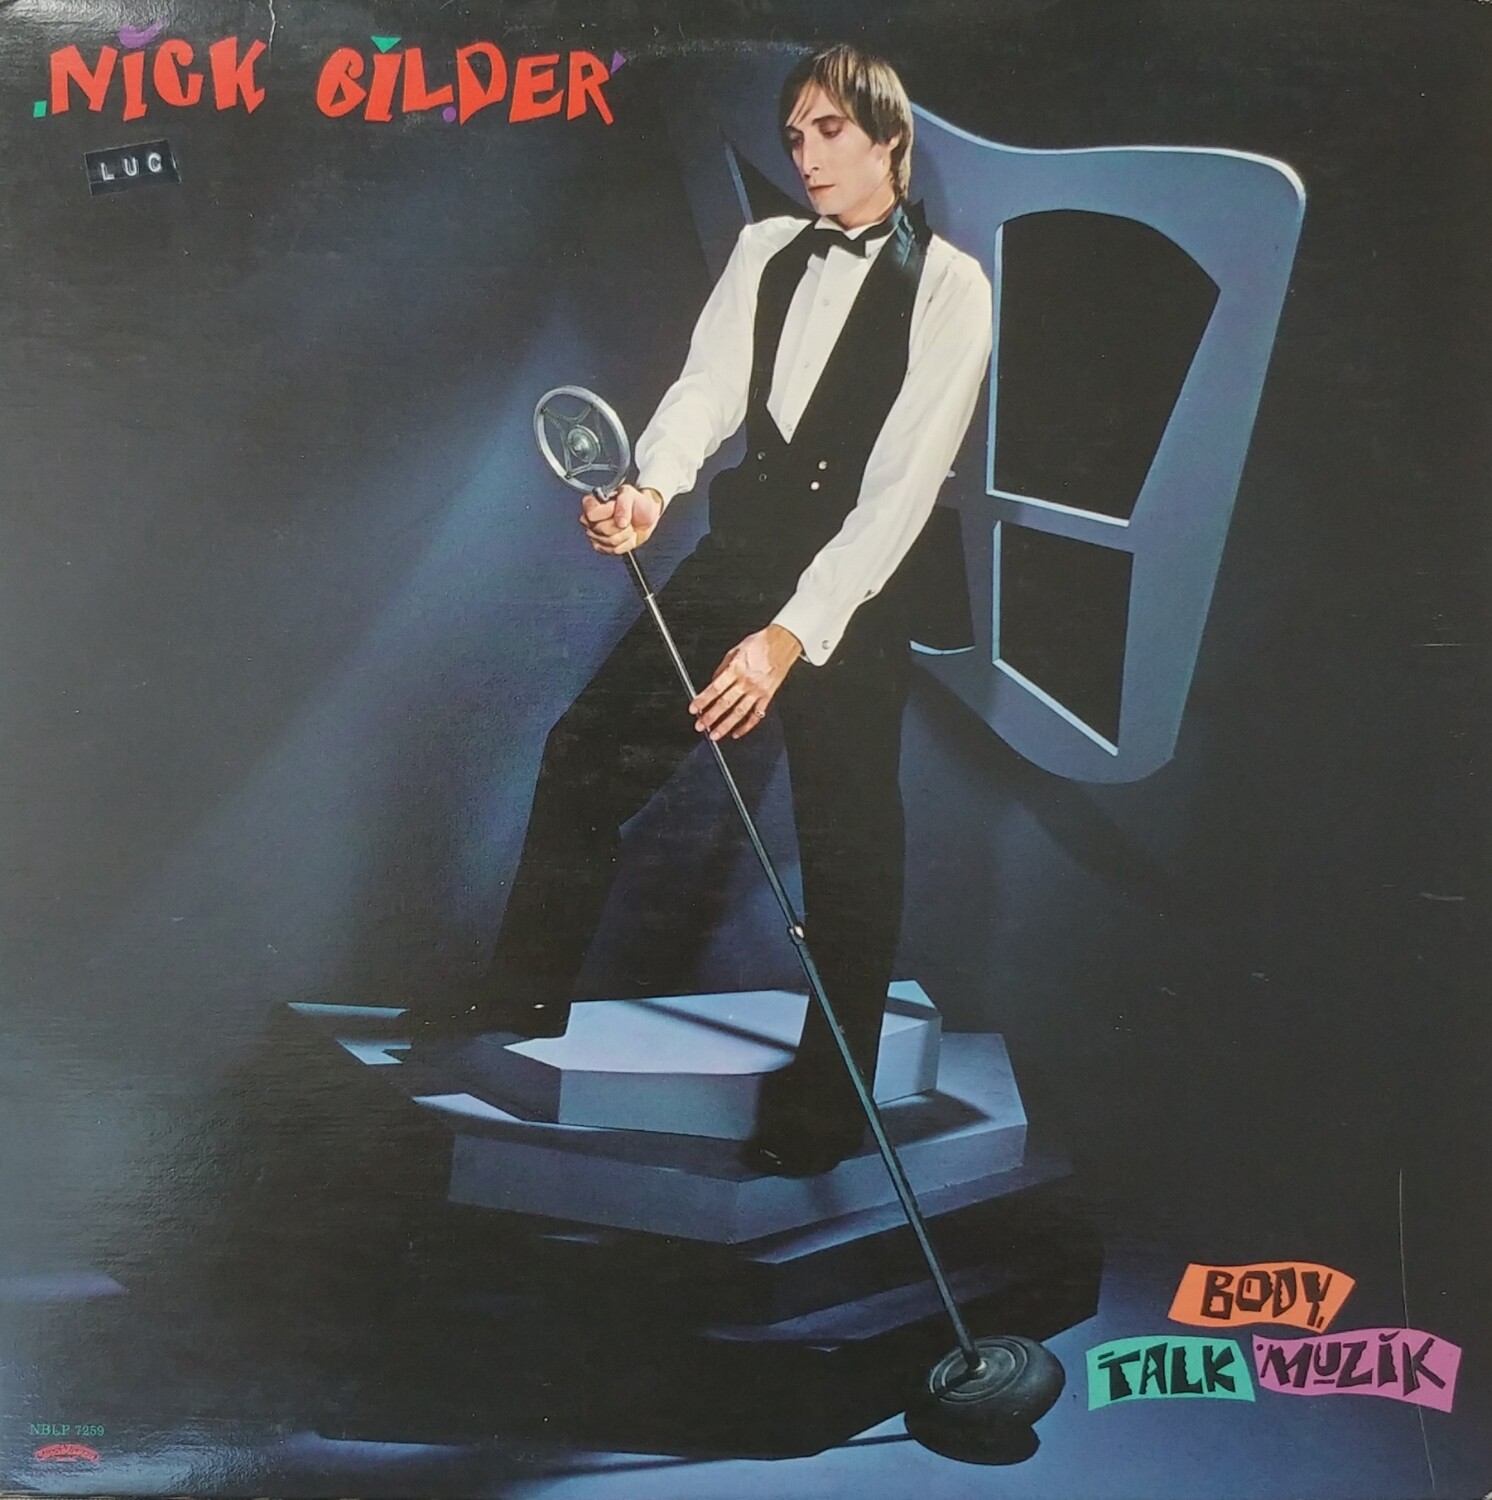 Nick Gilder - Body talk muzik